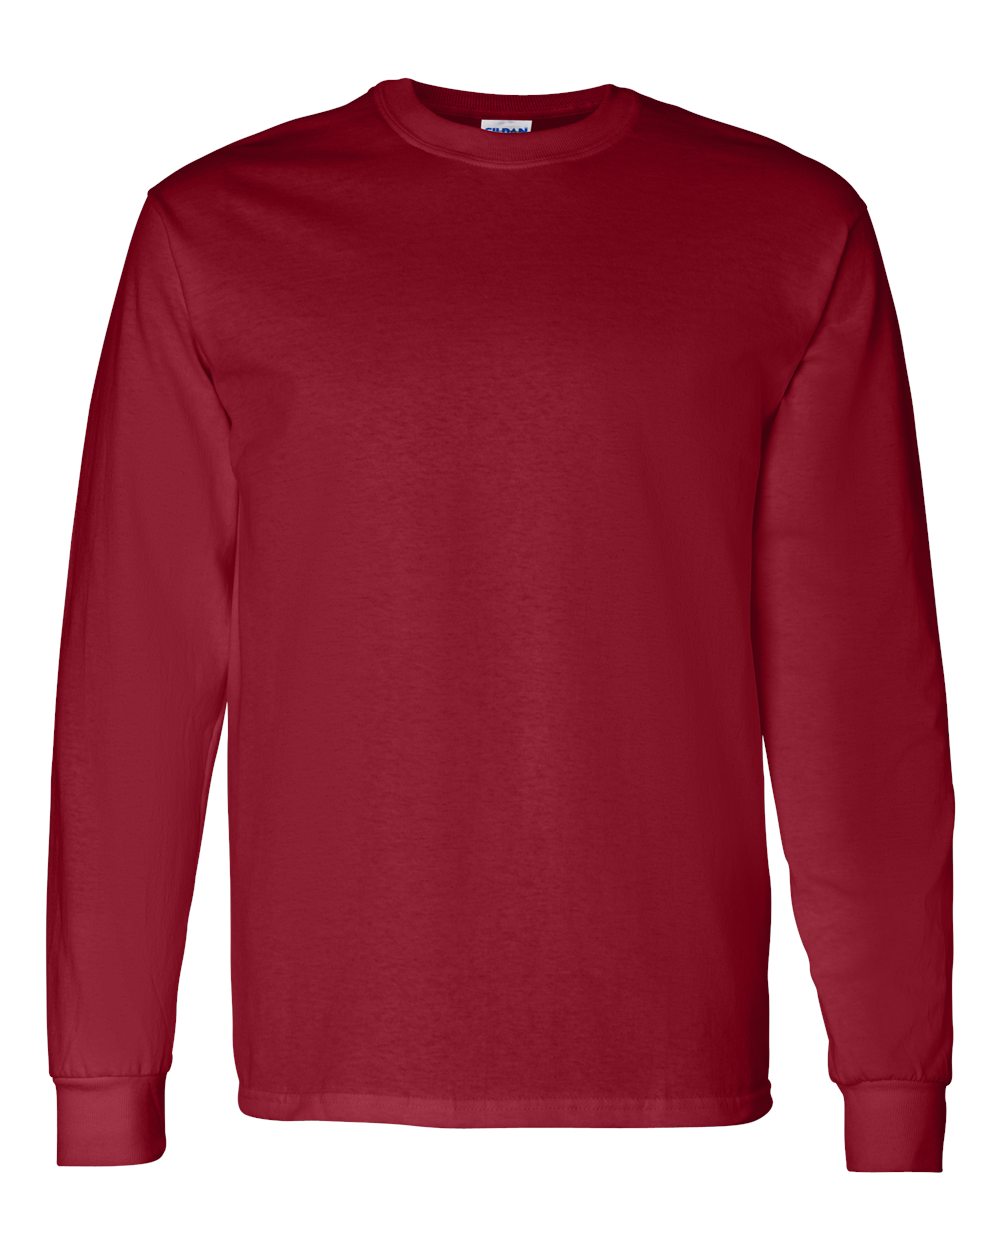 Gildan 5400 Heavy Cotton 5.3 oz. Long-Sleeve T-Shirt $6.10 - T-Shirts